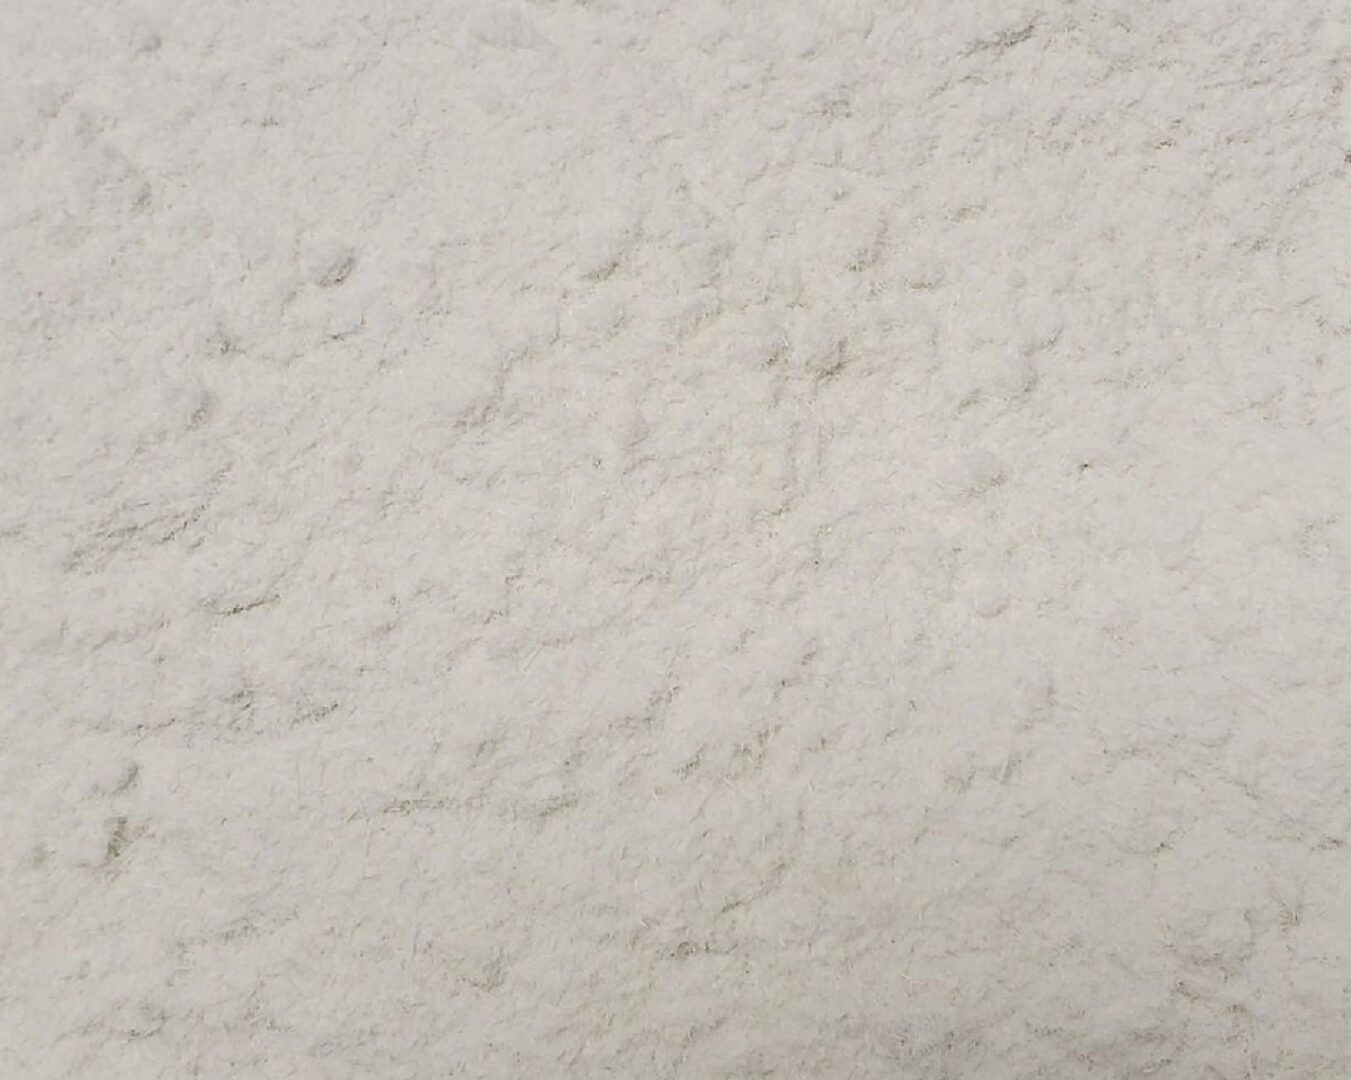 A close up of some white powder